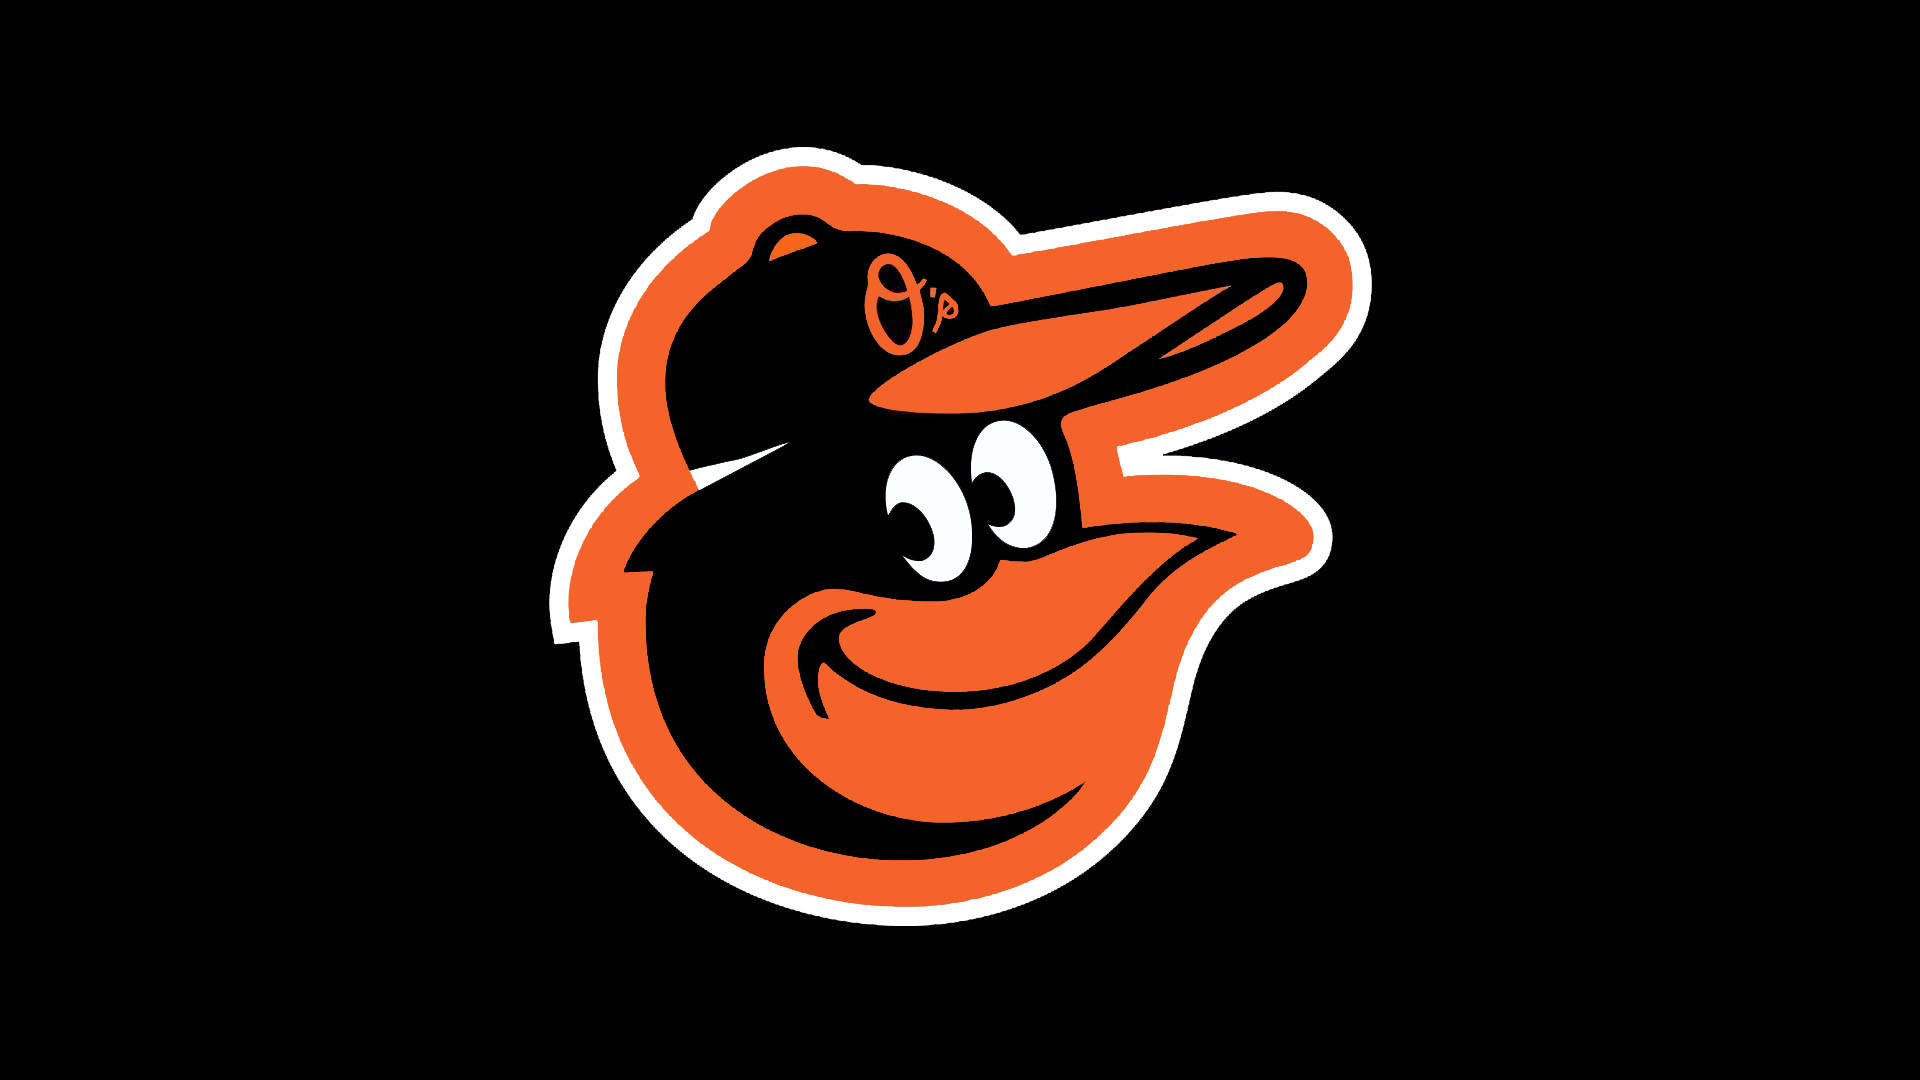 Baltimore Orioles 2019 Black Background